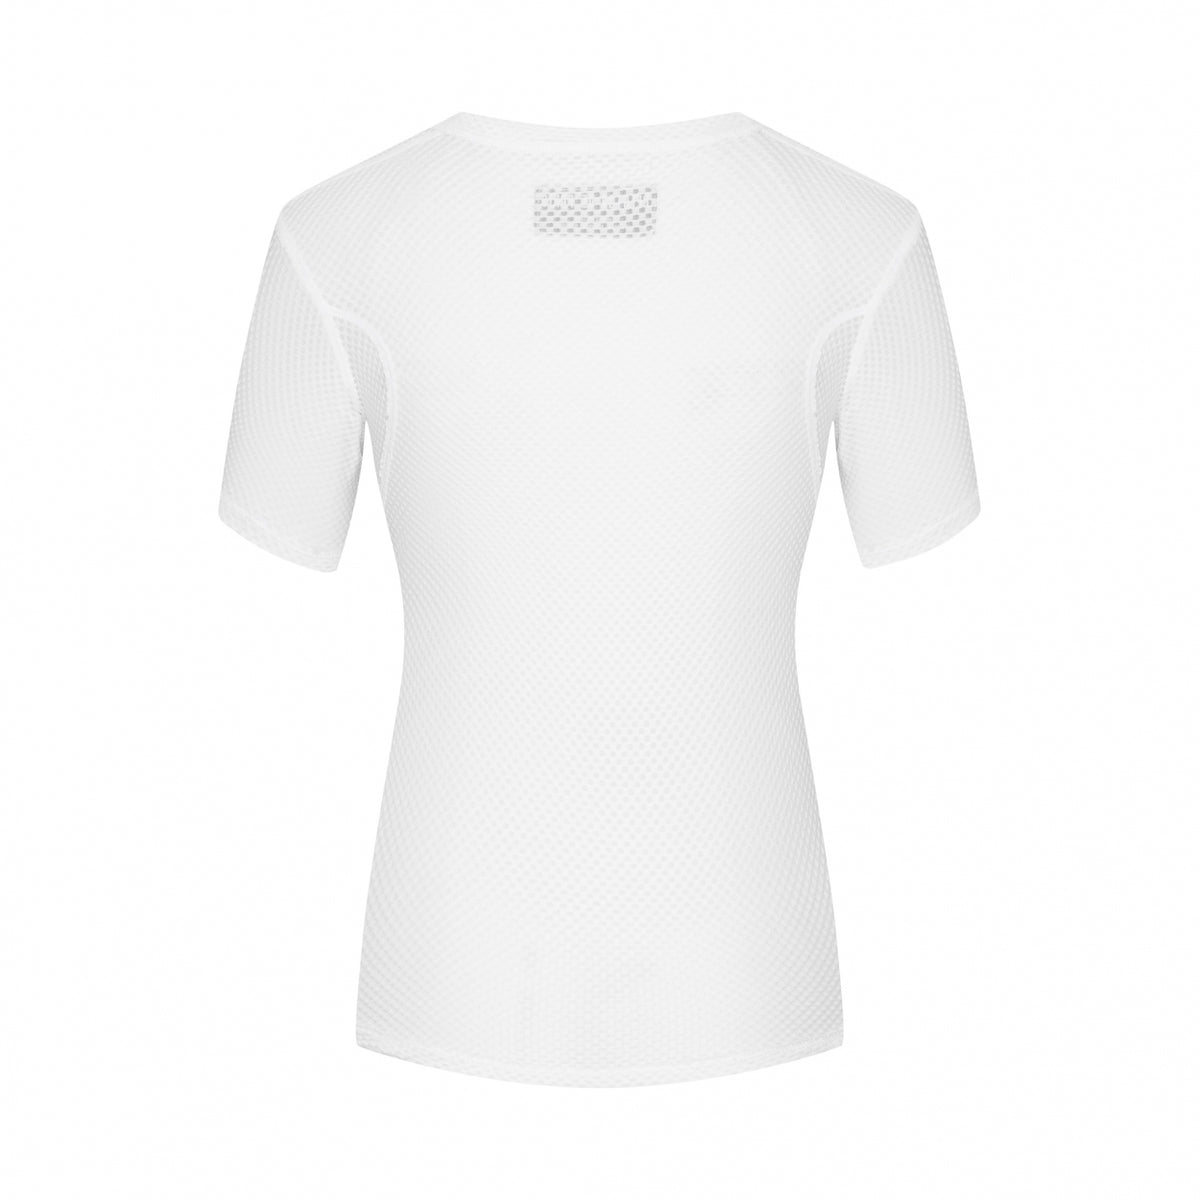 Domestique Short Sleeve Baselayer | White